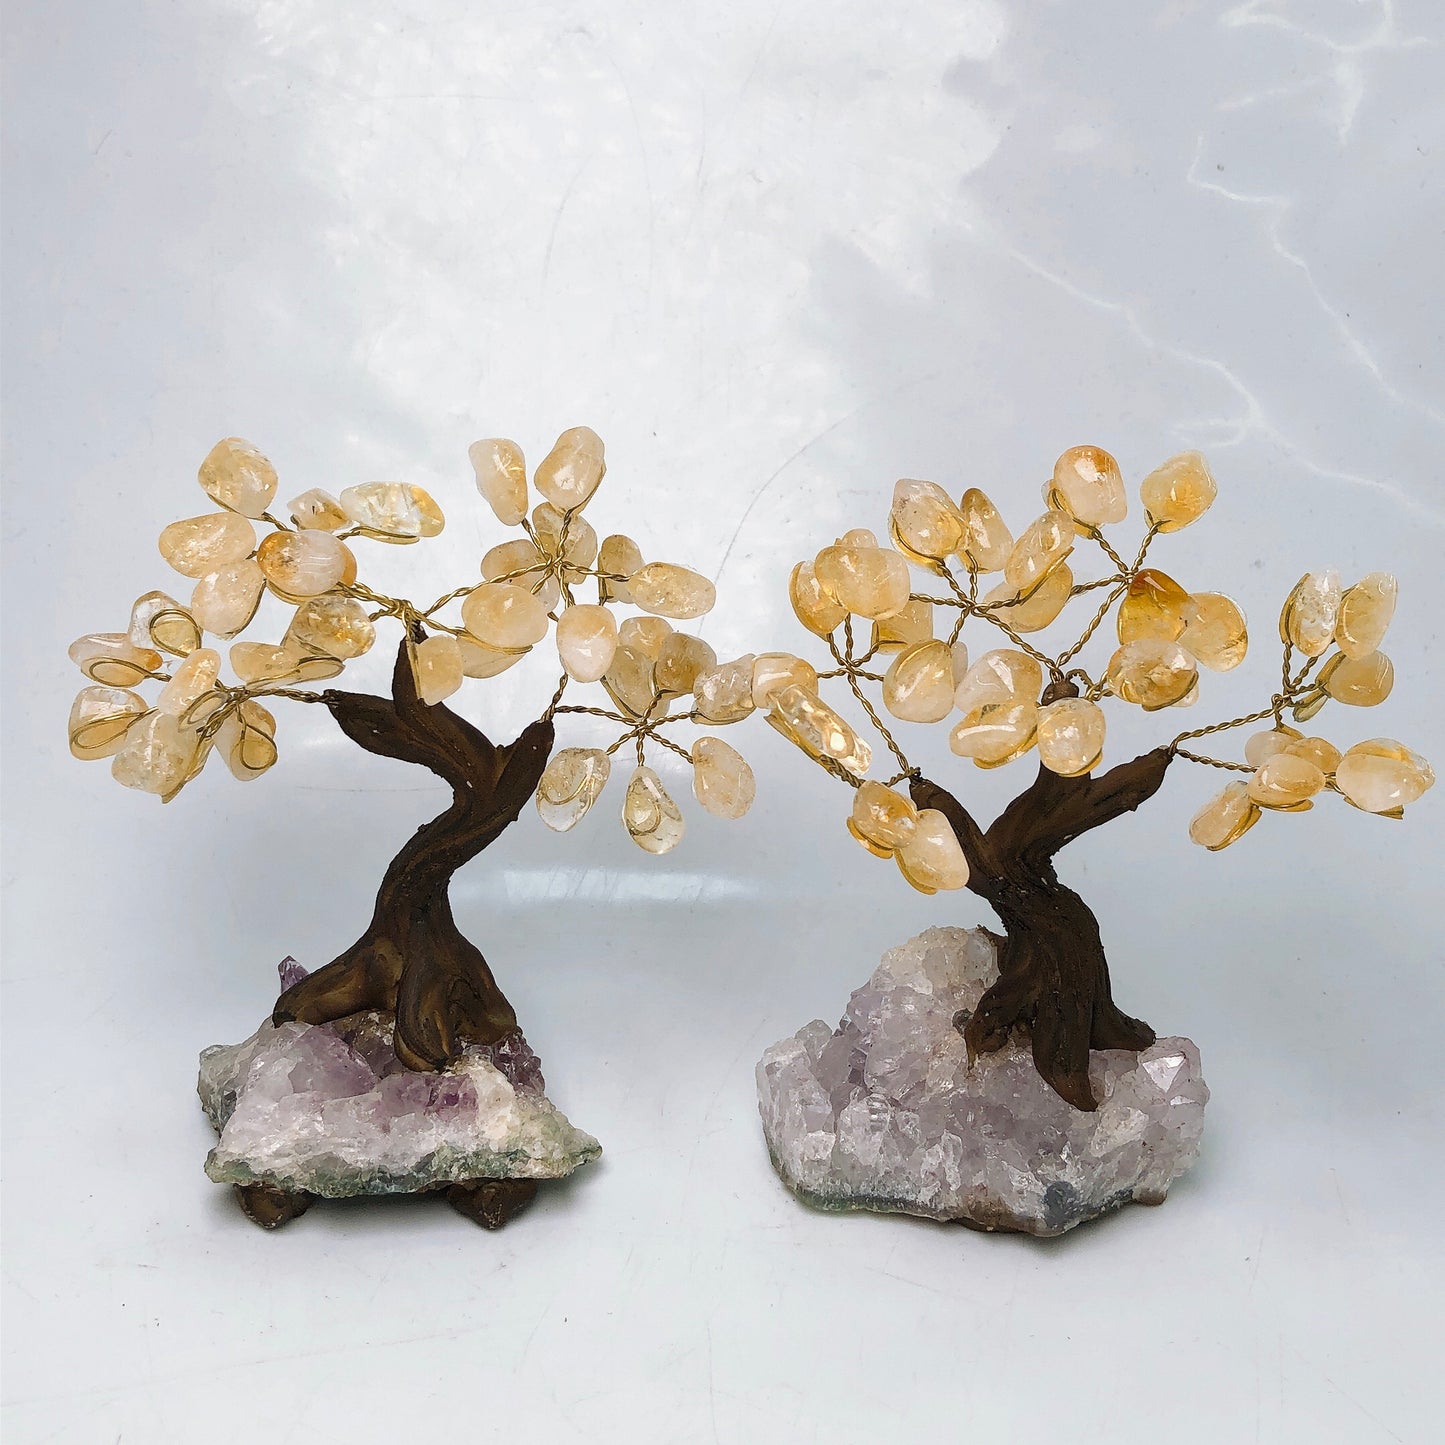 Amethyst citrine tree/crystal healing ornamentsFree shipping over $200